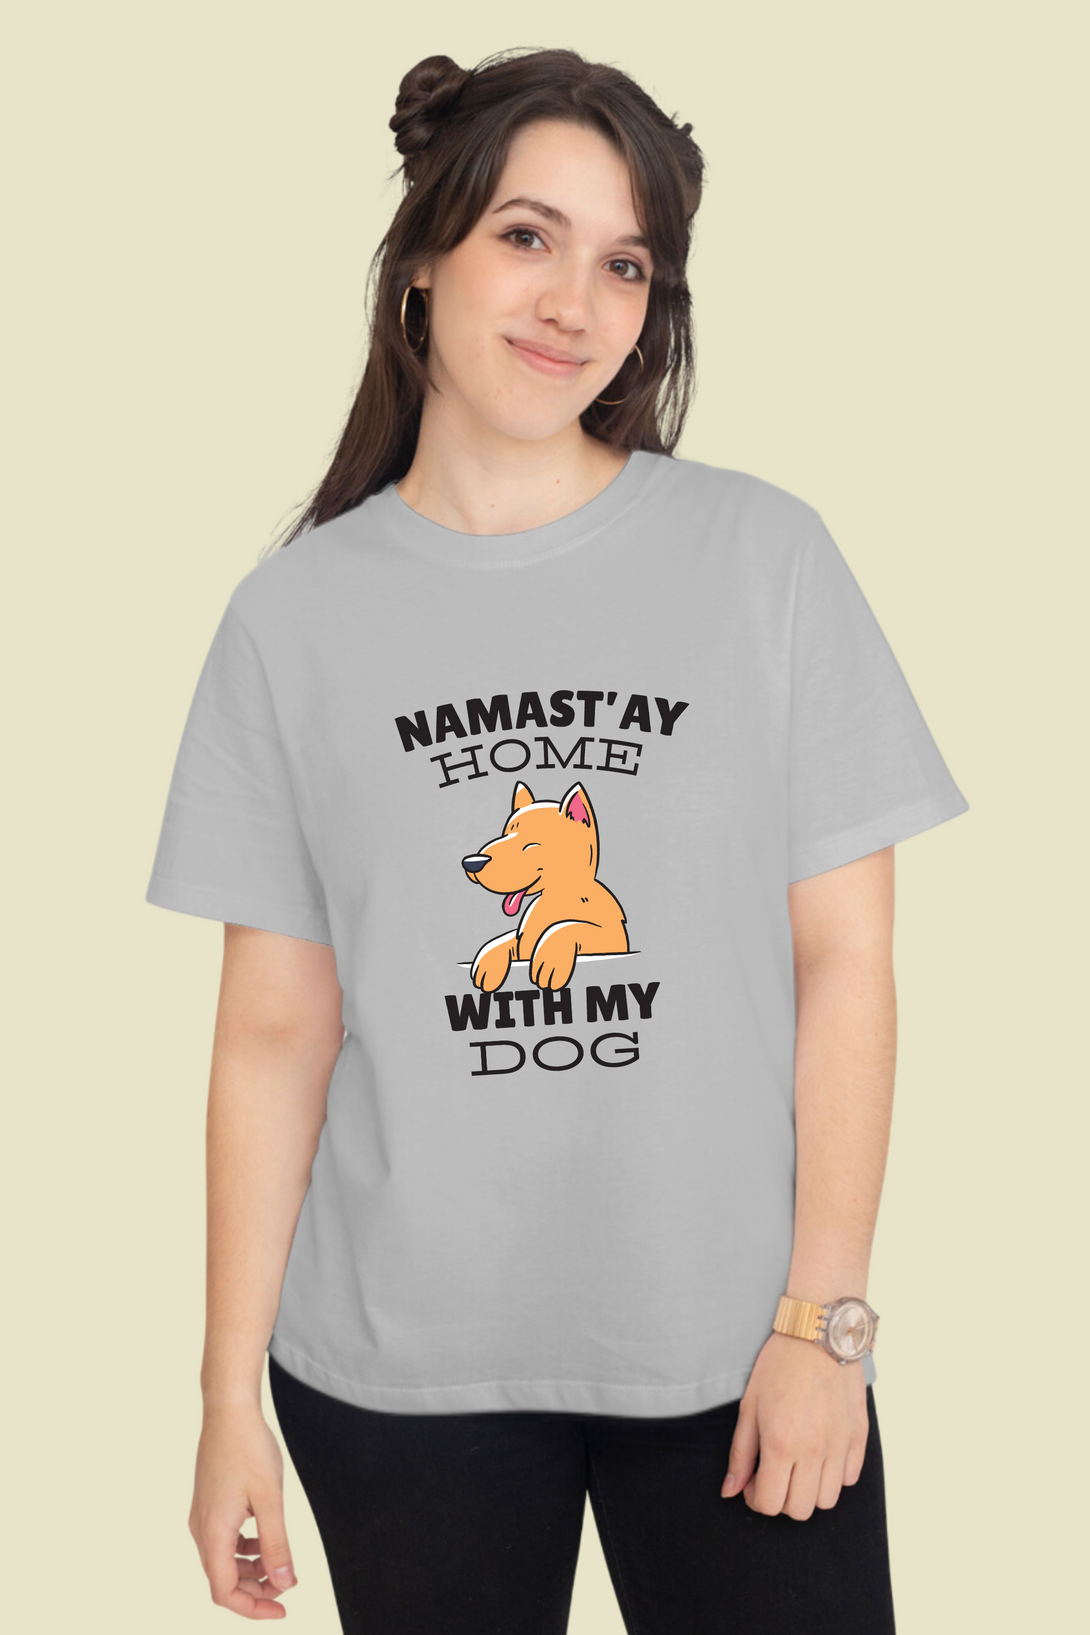 Namastay Home Dog Printed T-Shirt For Women - WowWaves - 10